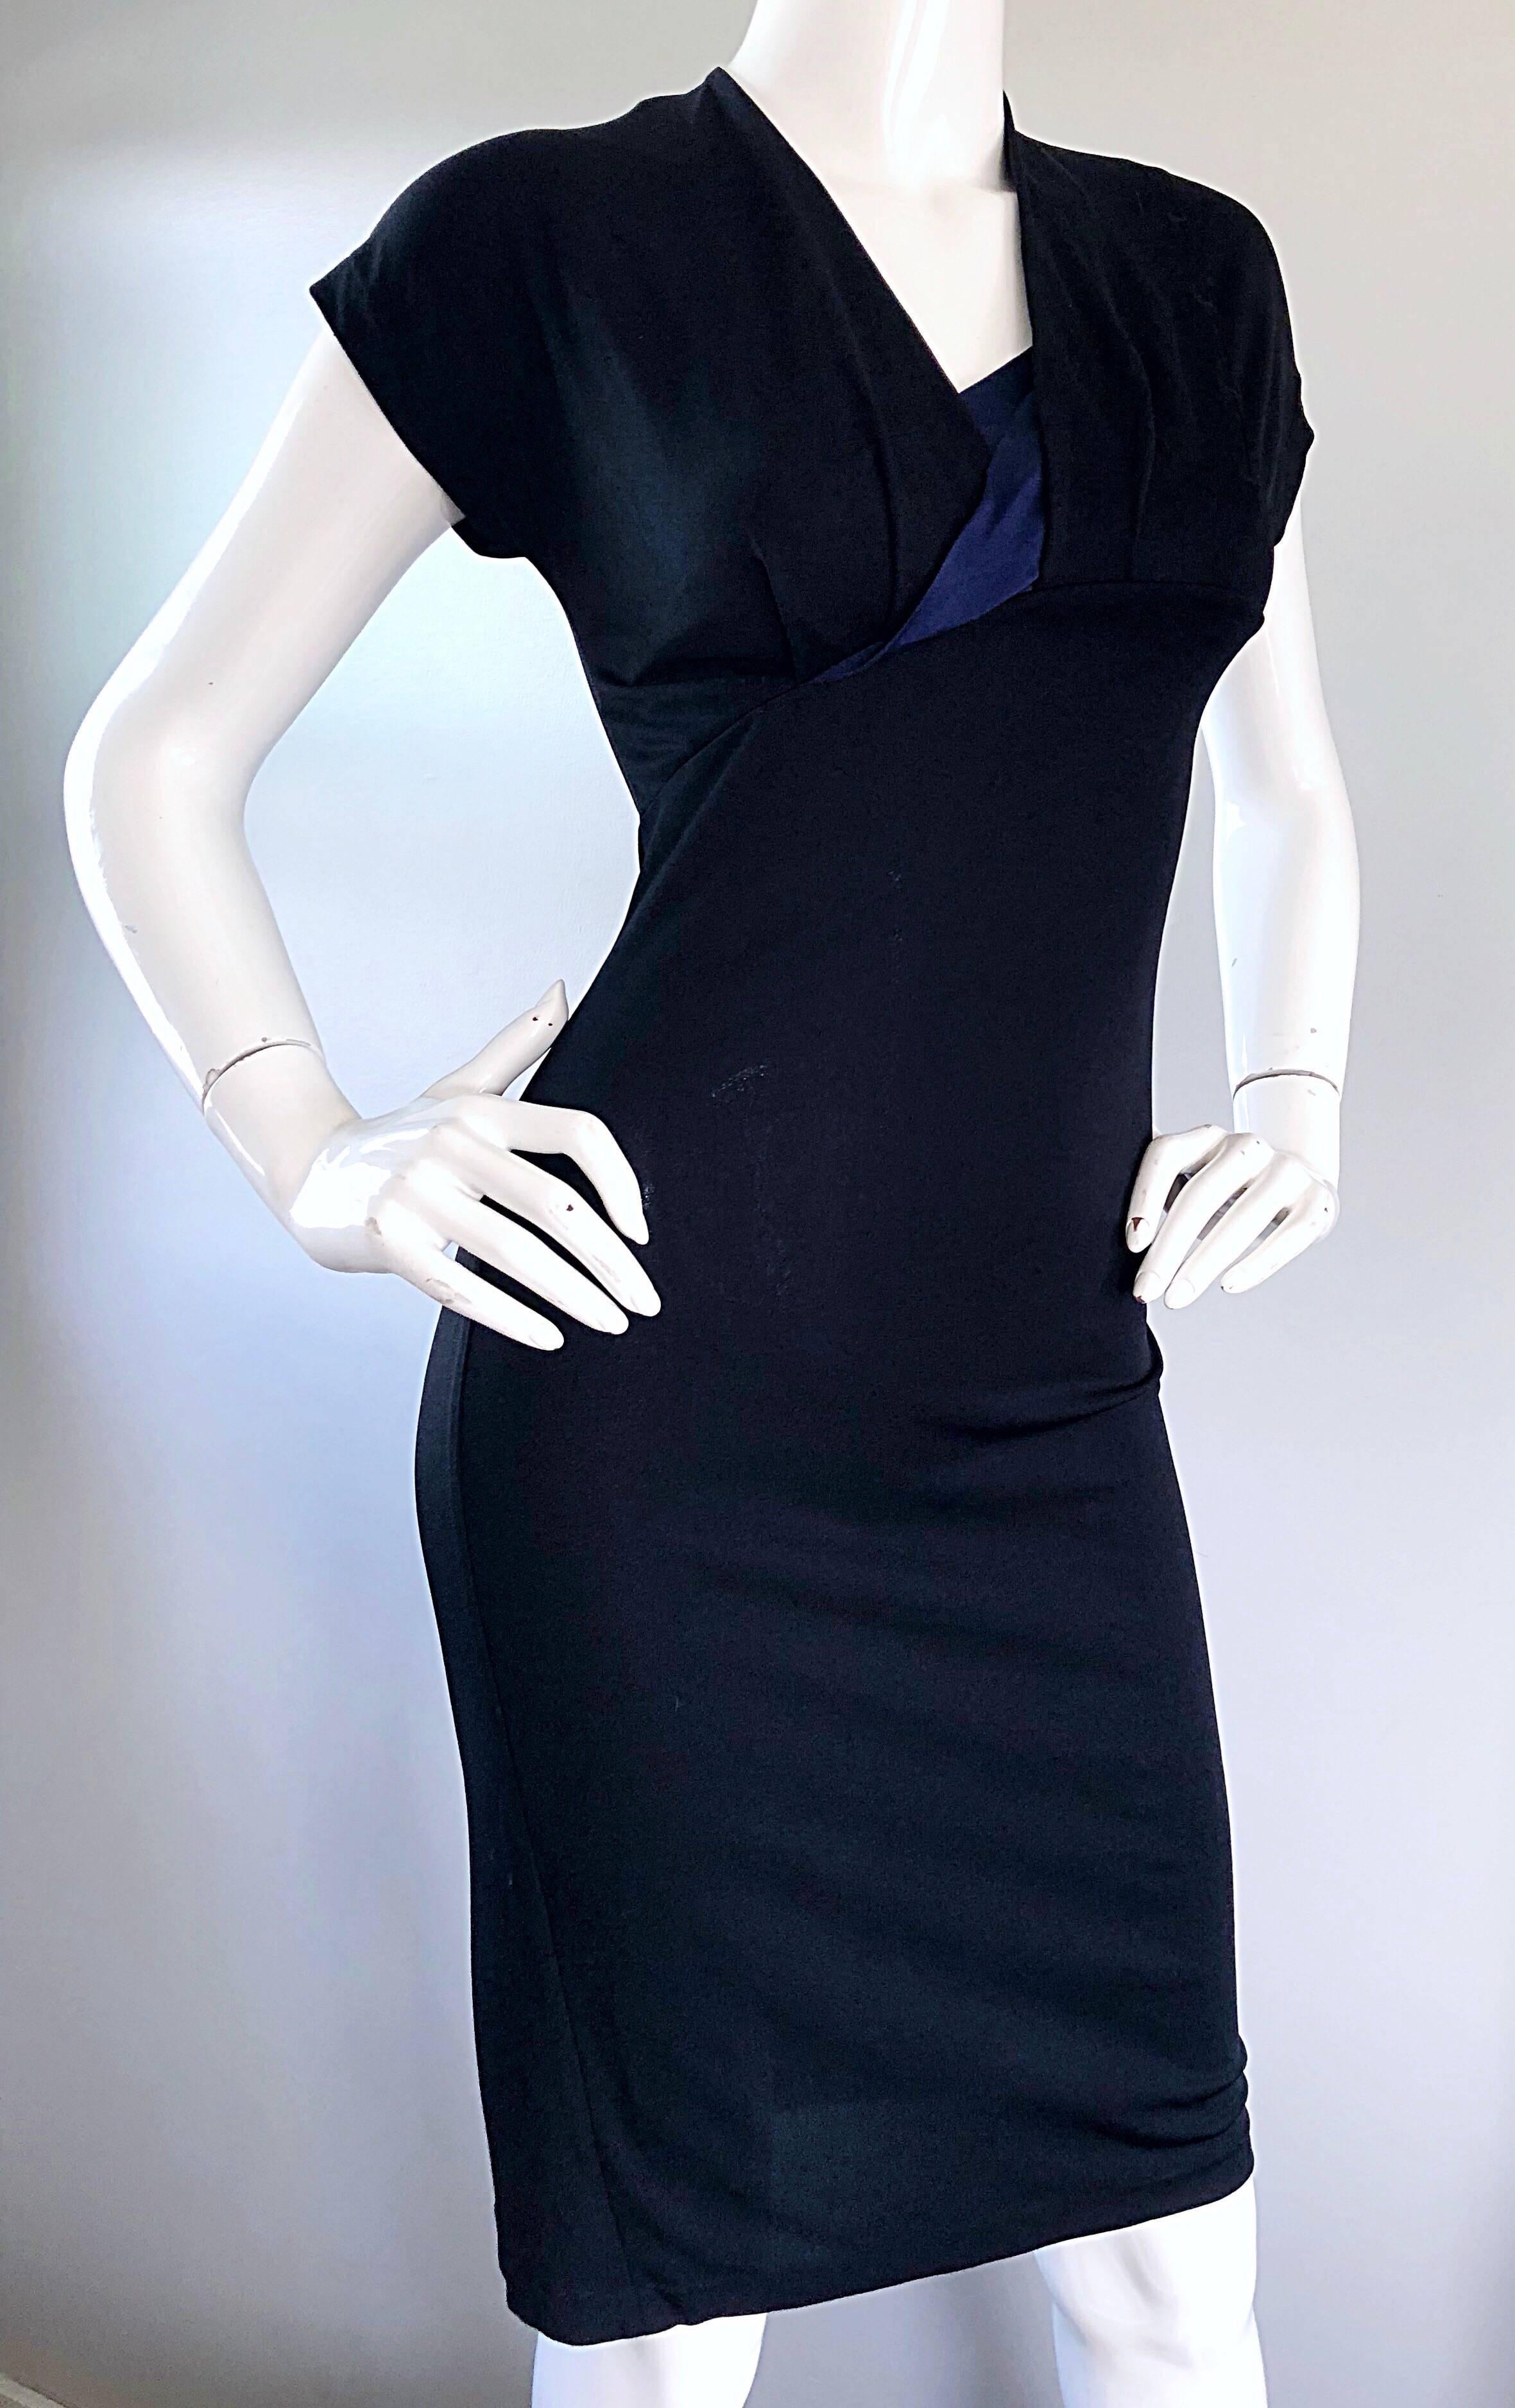 Vintage Salvatore Ferragamo 1990s Black and Navy Blue Jersey Dress Size 40 For Sale 2